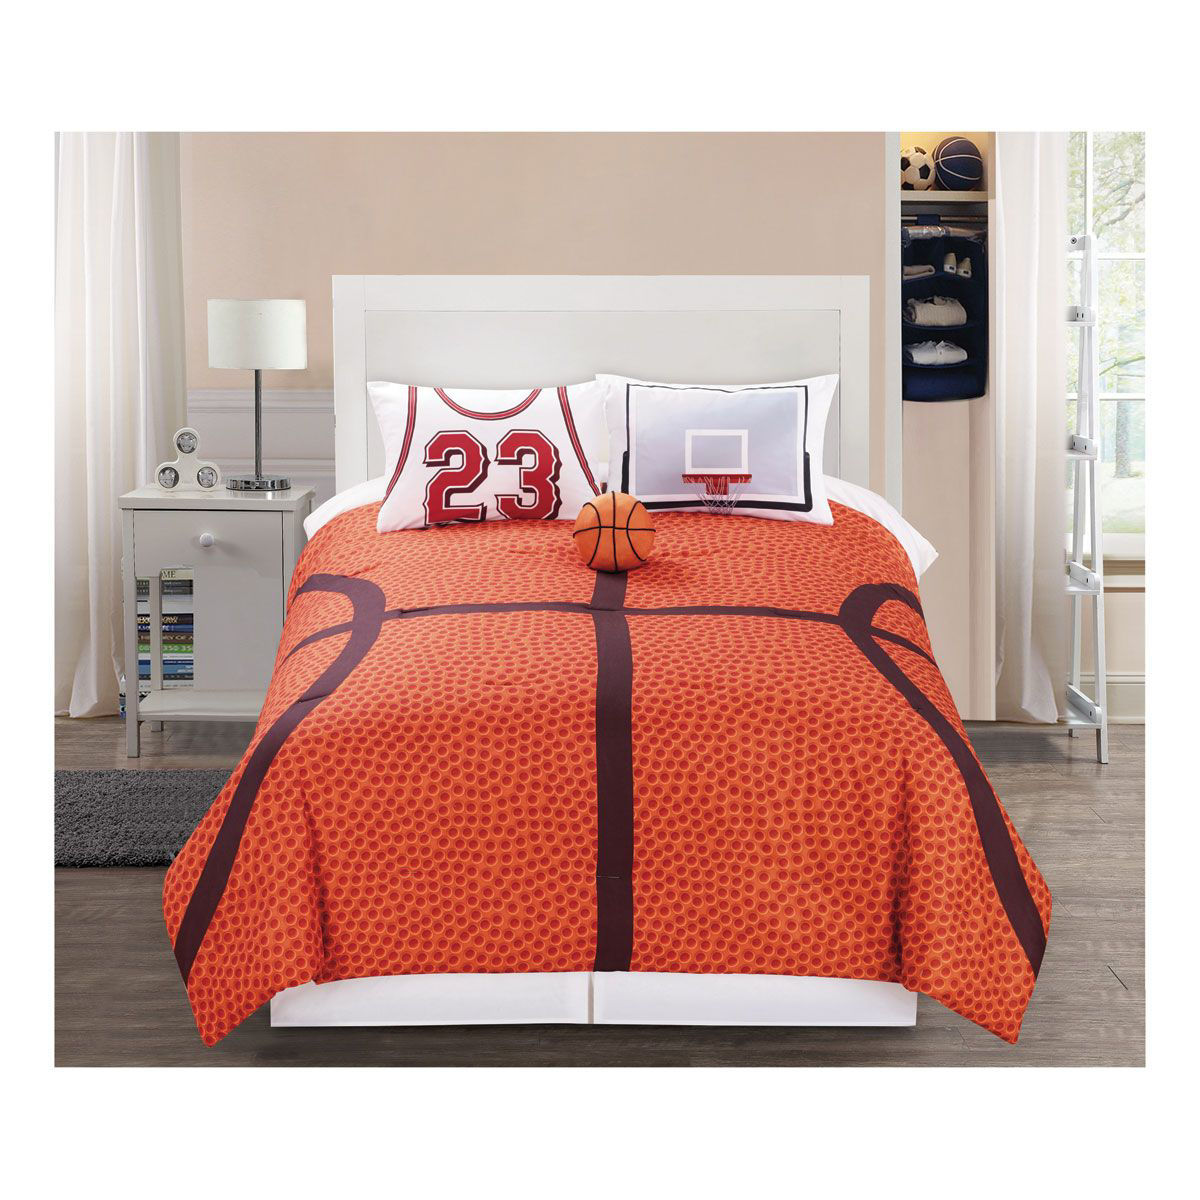 3-Pieces Sports Bedding Reversibl Basketball Comforter Set Twin for Boys Teens 